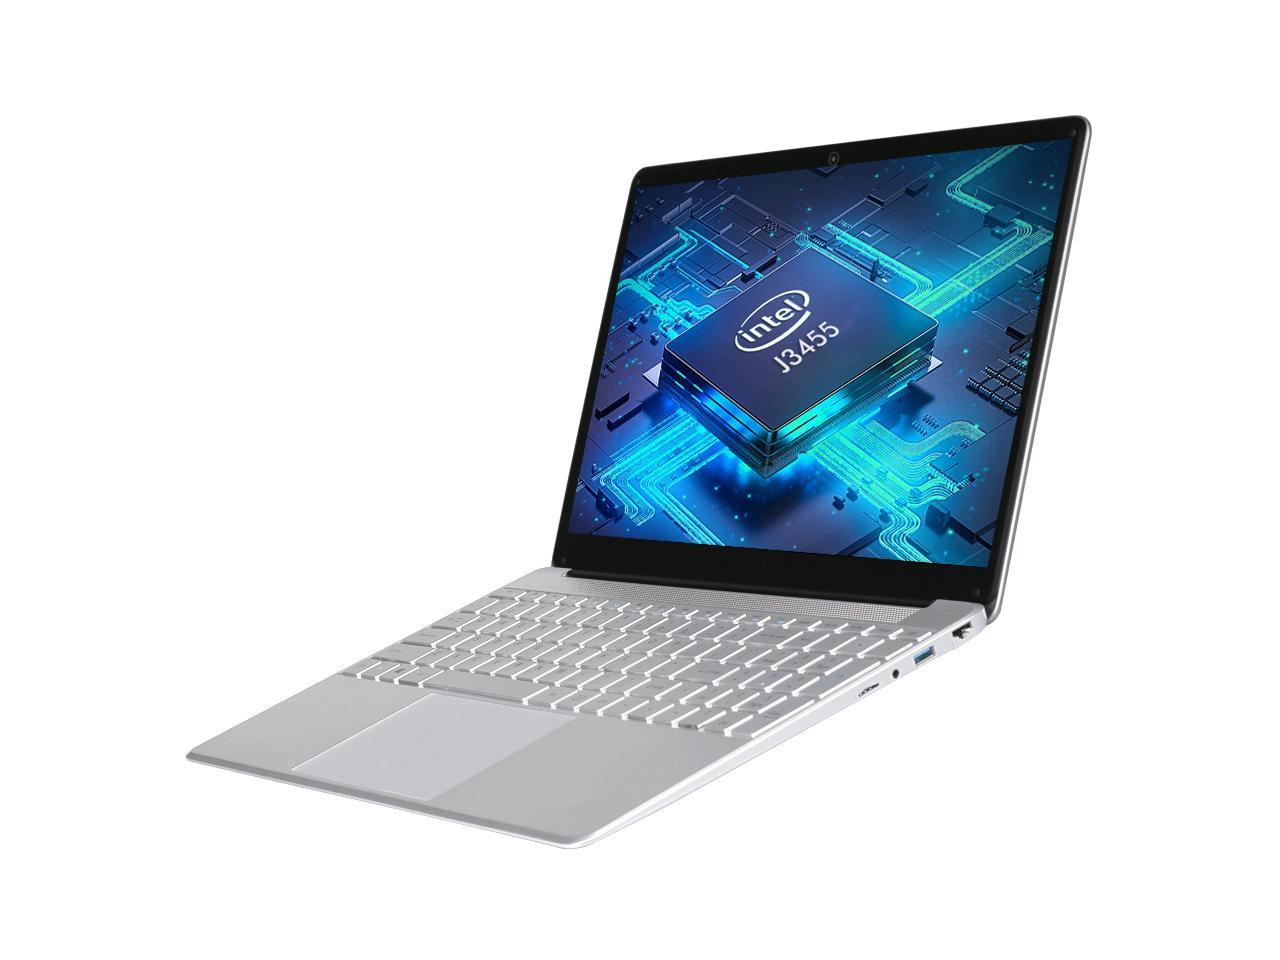 KUU-A8S 15.6inch Silver Laptop Intel Celeron Processor J3455 Up to 2.3GHz 6GB DDR3 RAM 256GB SSD Windows 10 Office Work Notebook Computer